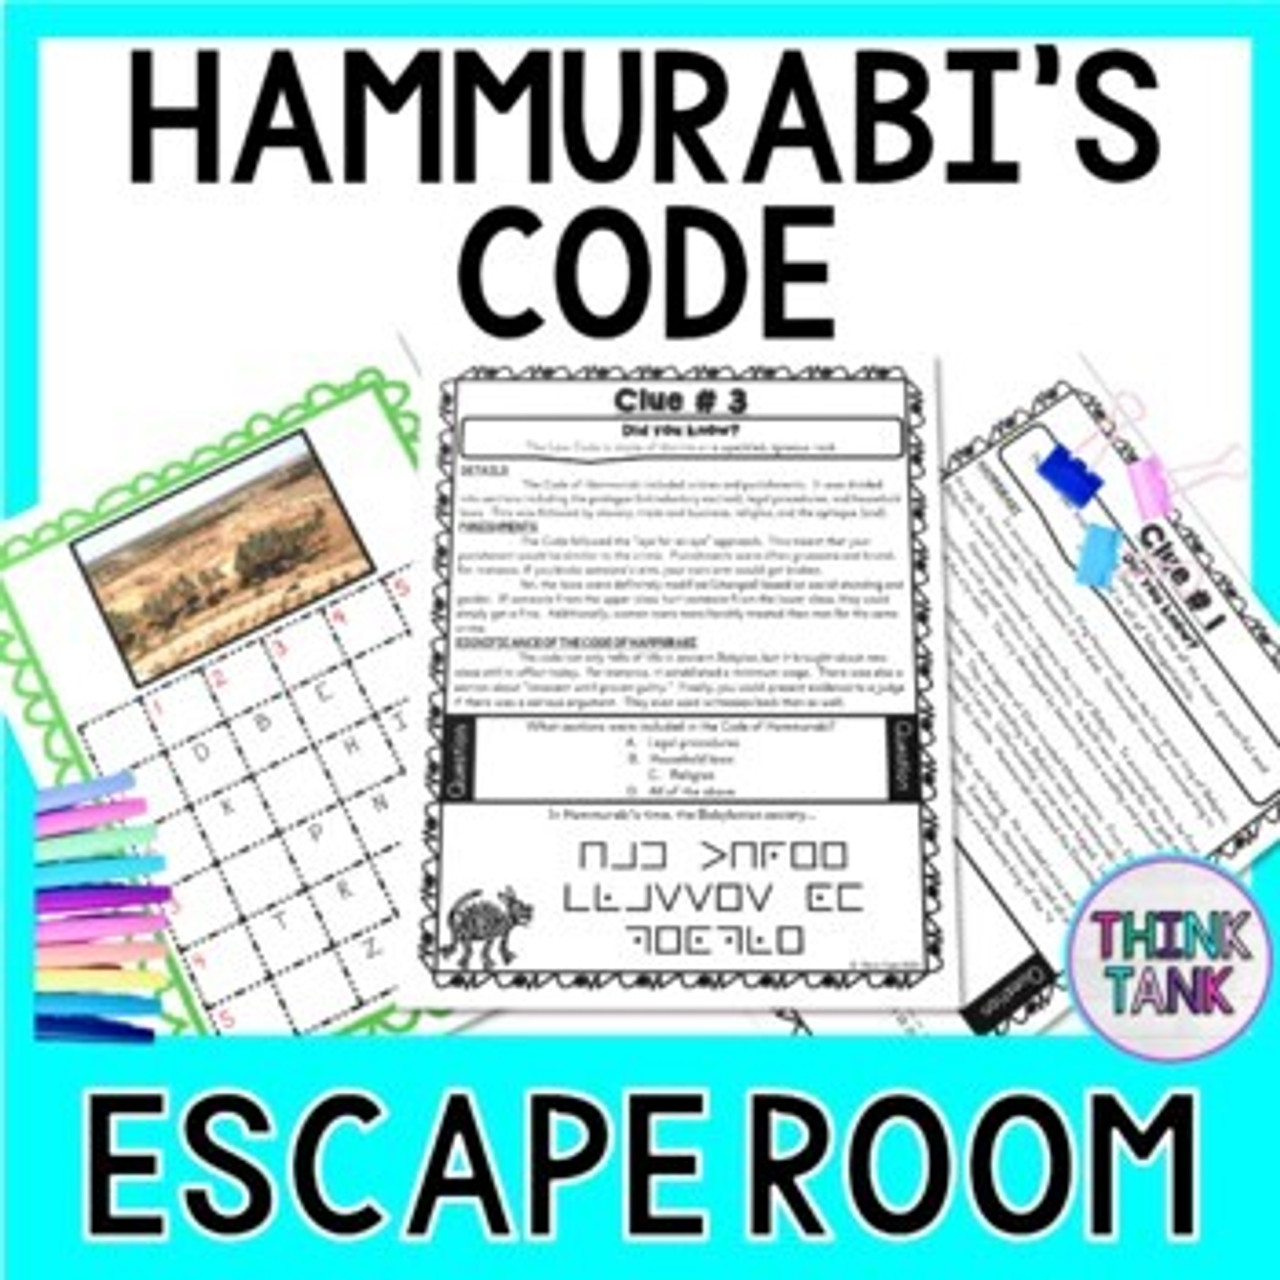 Hammurabi's Code ESCAPE ROOM